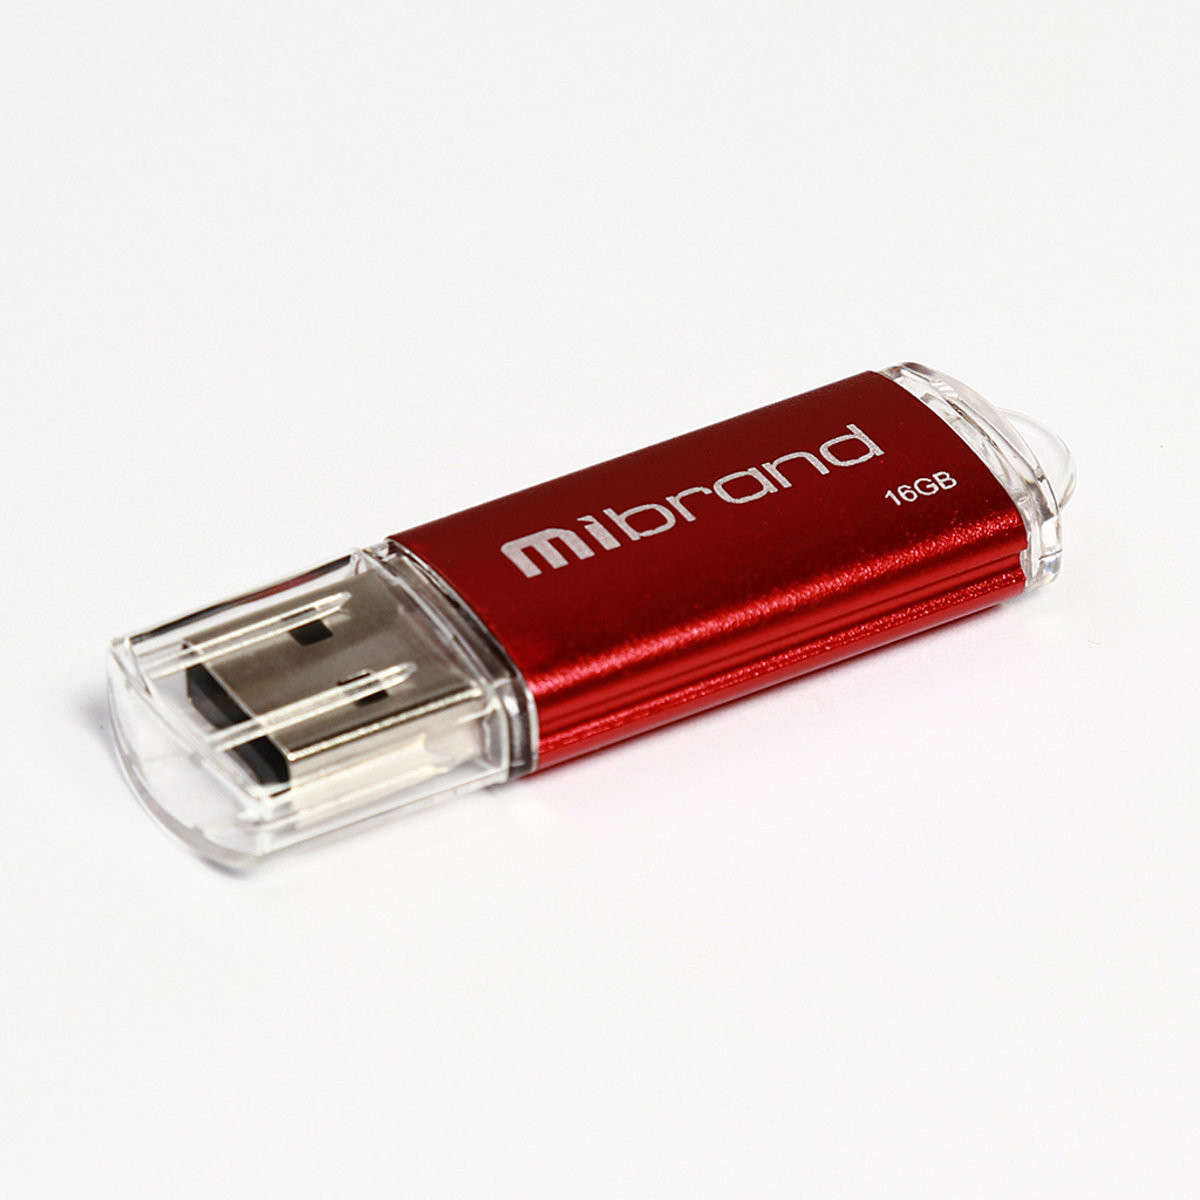 Флешка Mibrand USB 2.0 Cougar 16Gb Red - 1